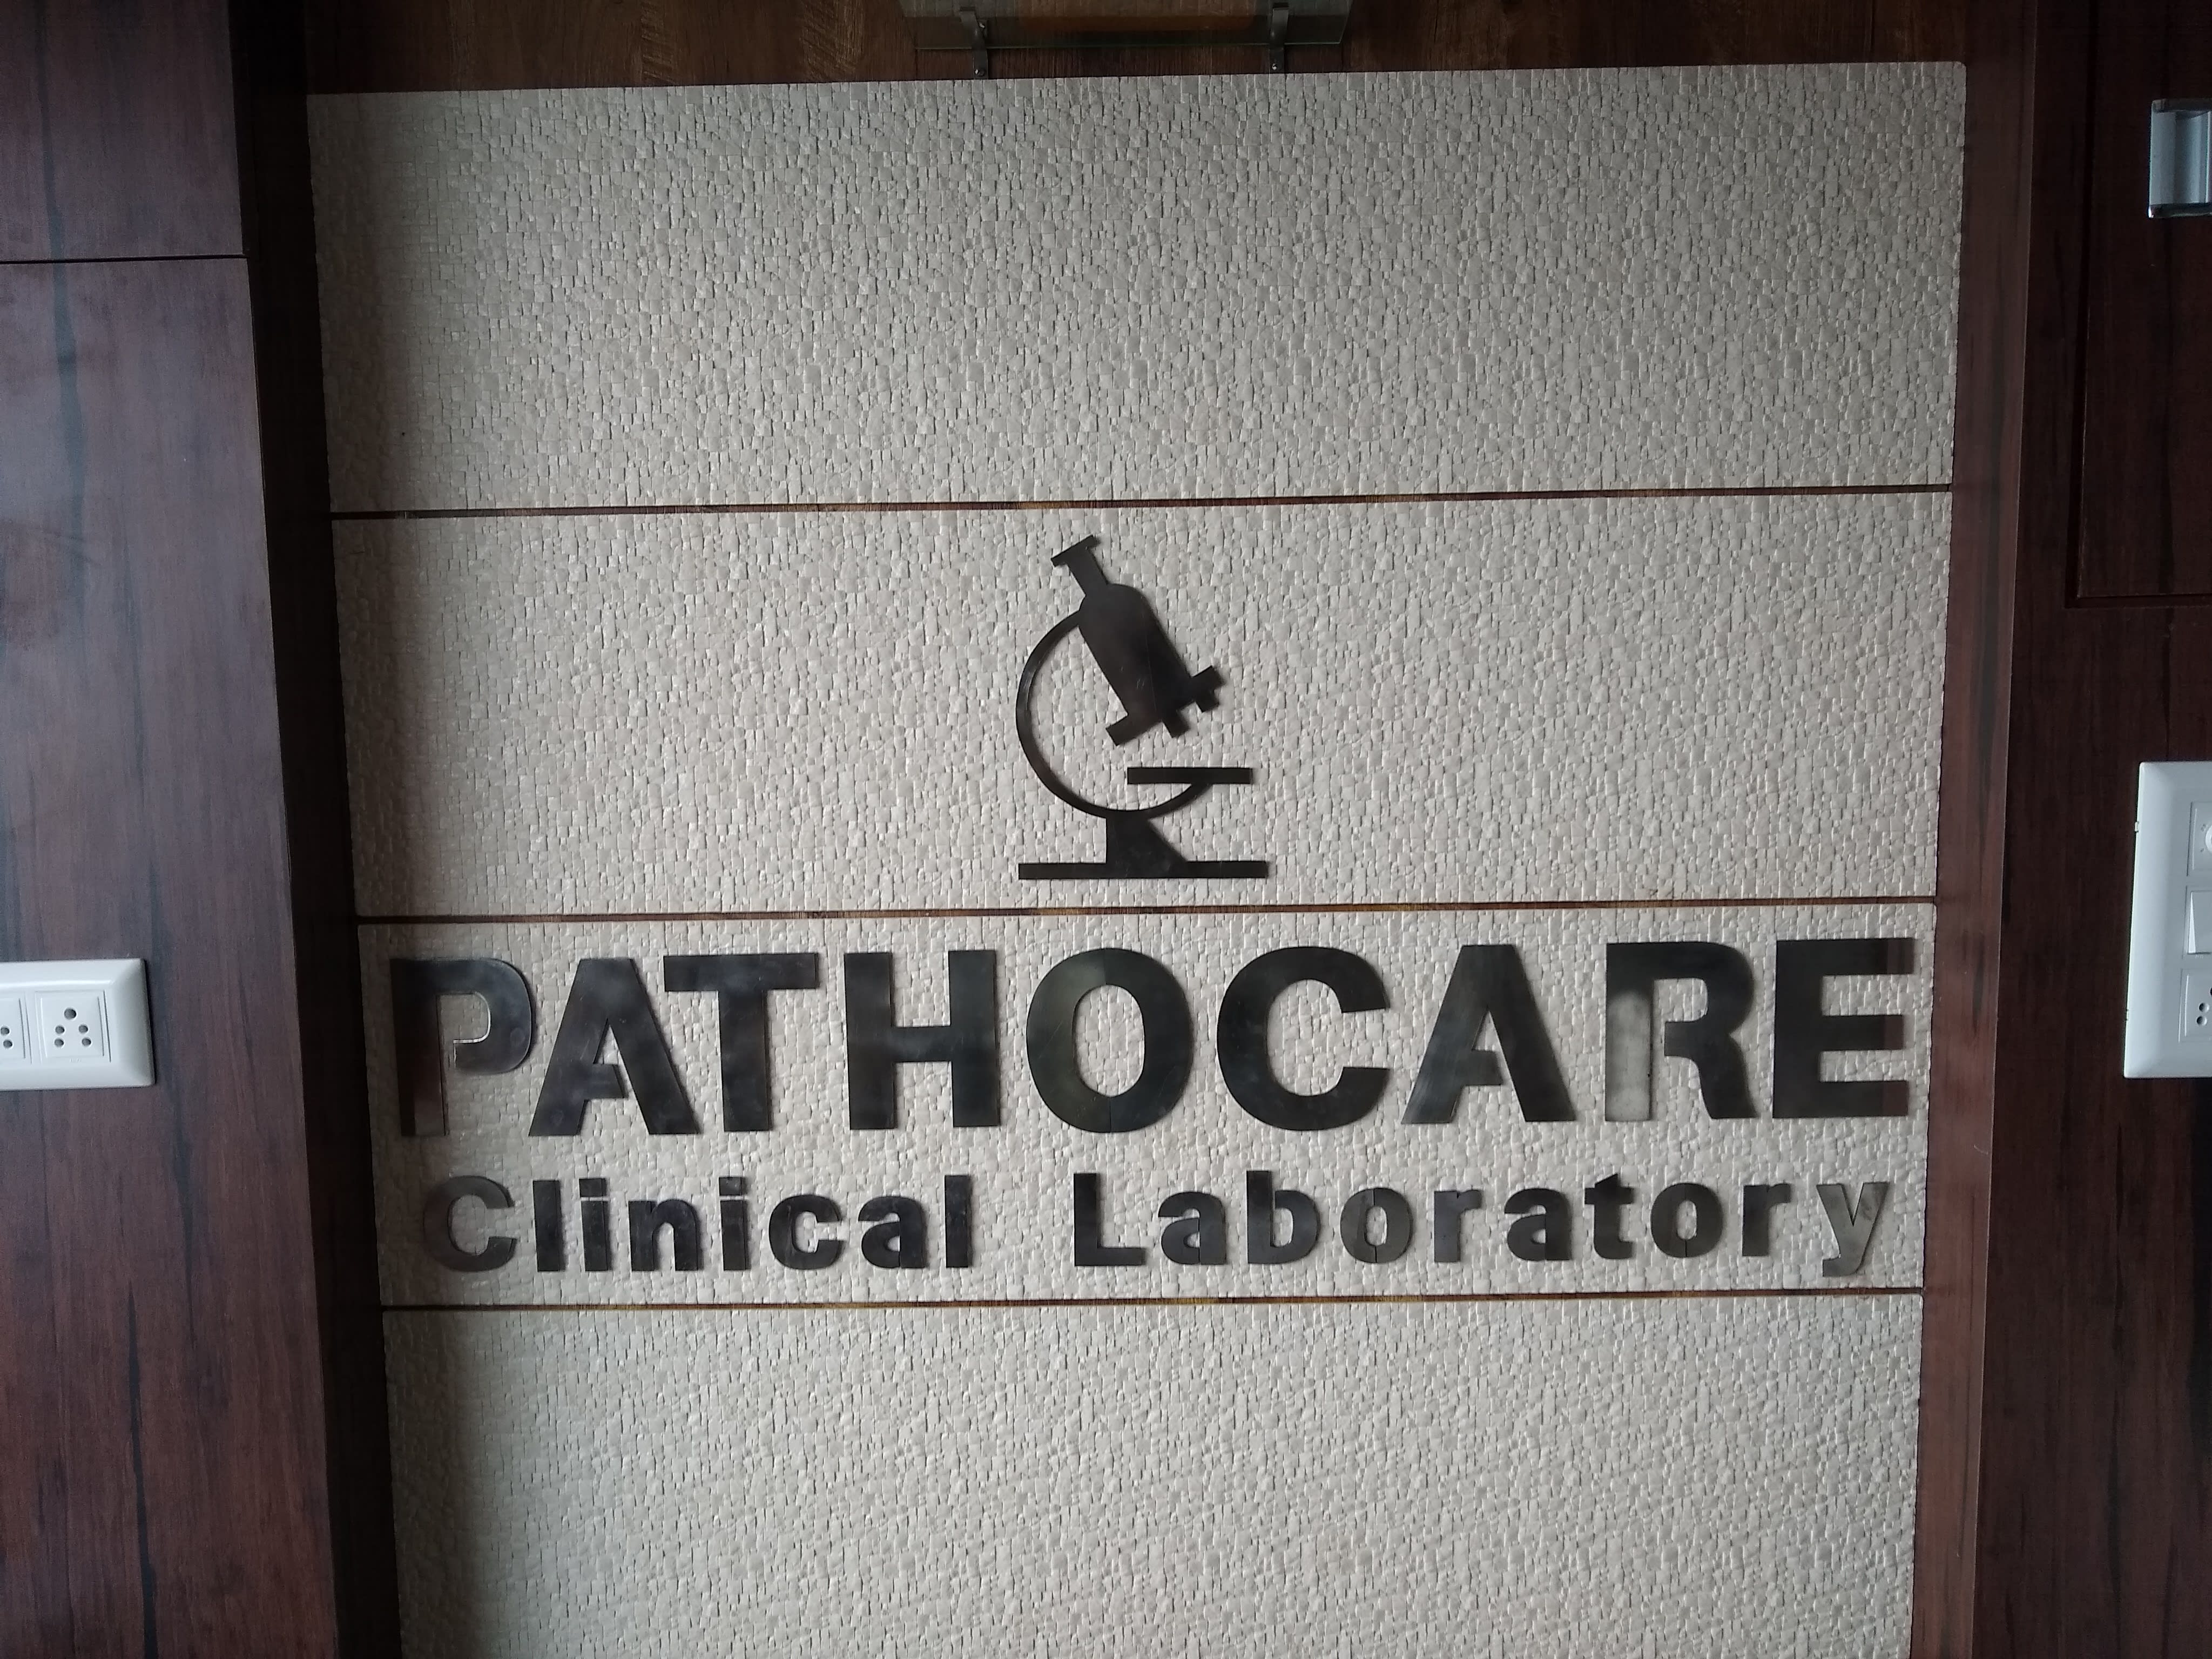 Pathocare Clinical Laboratory